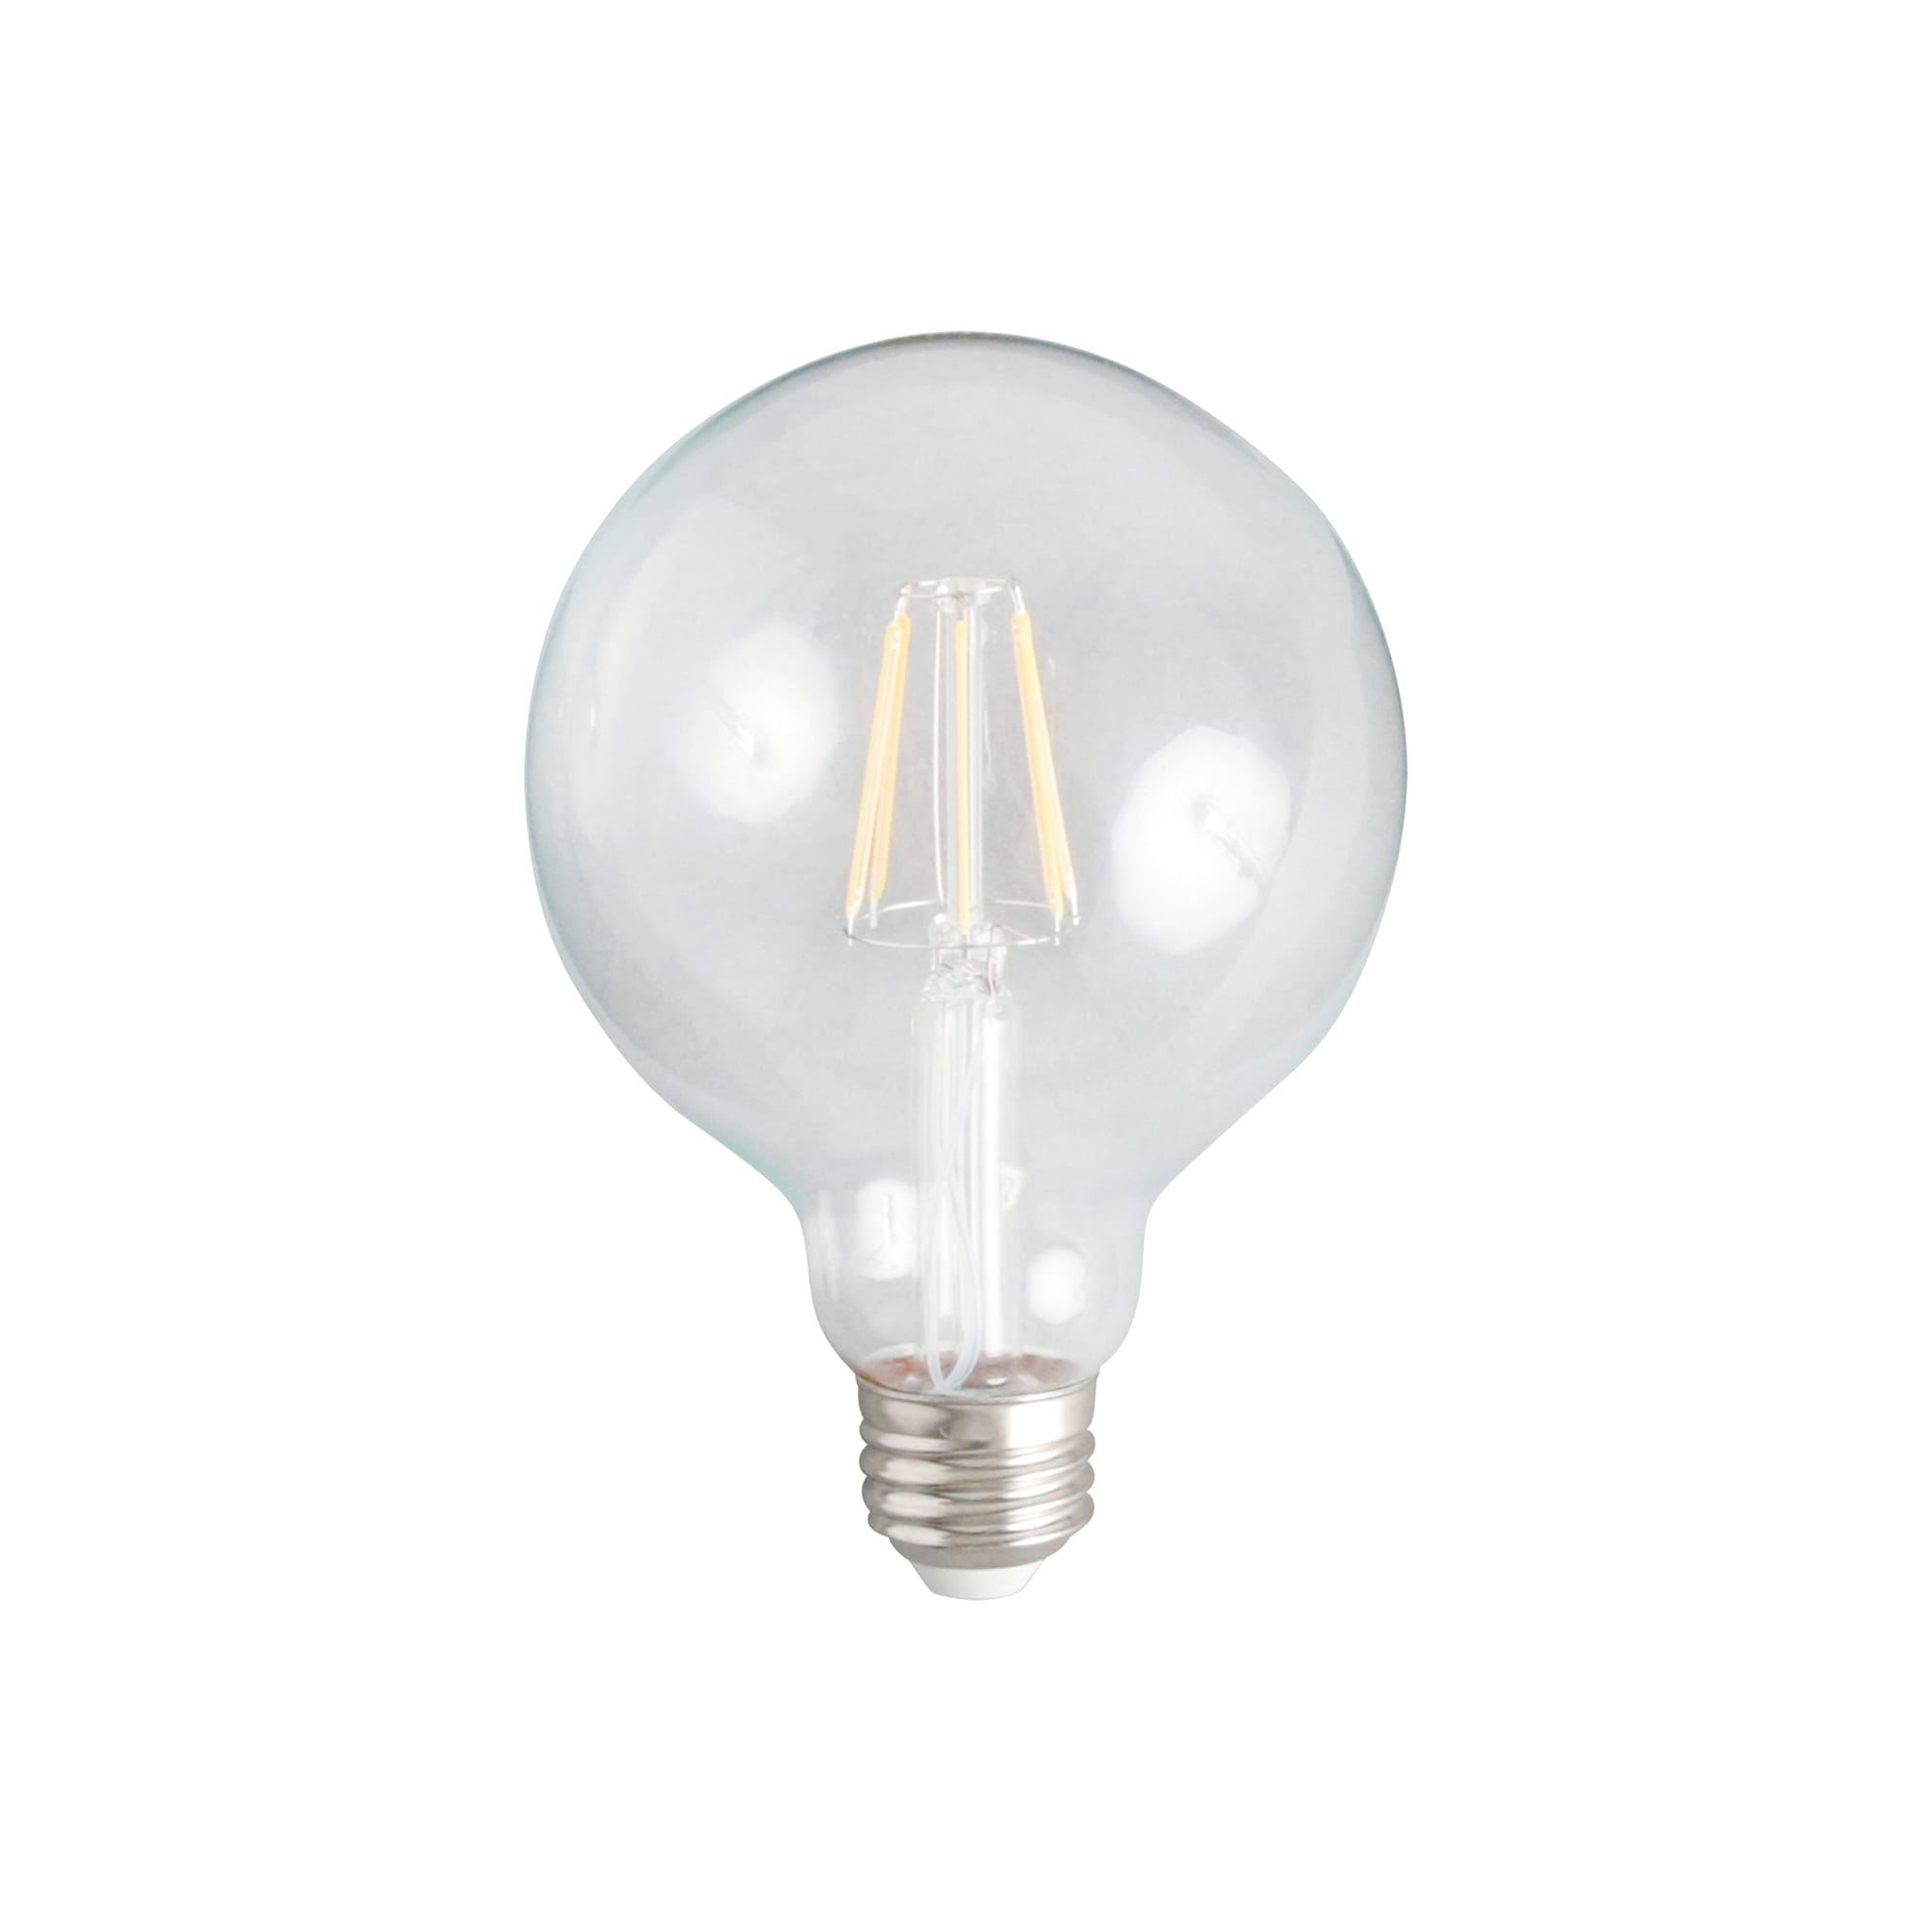 ビンテージLED電球 LEDボール95(E26)60W相当 LT-BB002-07-G141 60W相当と明るいタイプのフィラメント型LED電球